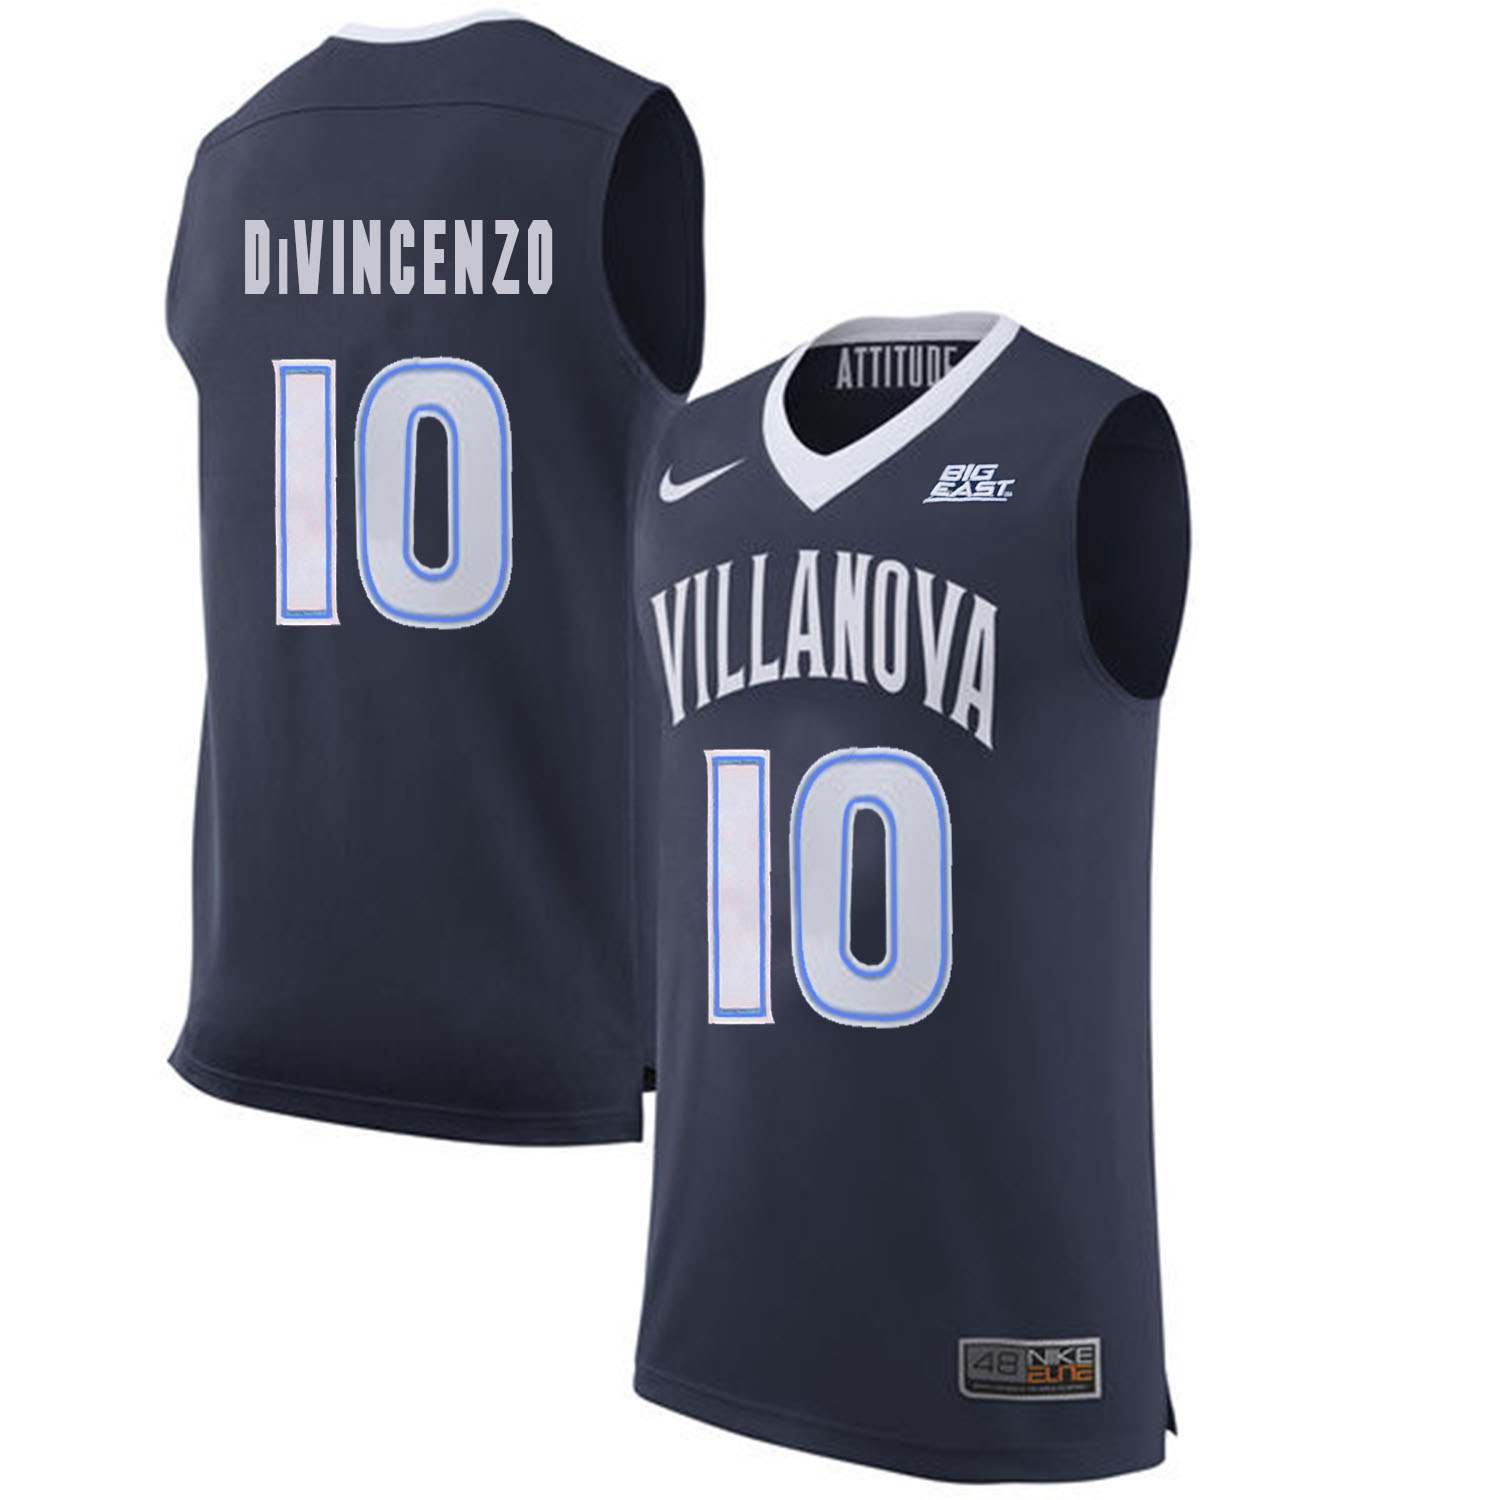 Villanova 10 Wildcats Donte DiVincenzo Navy College Basketball Elite Jersey